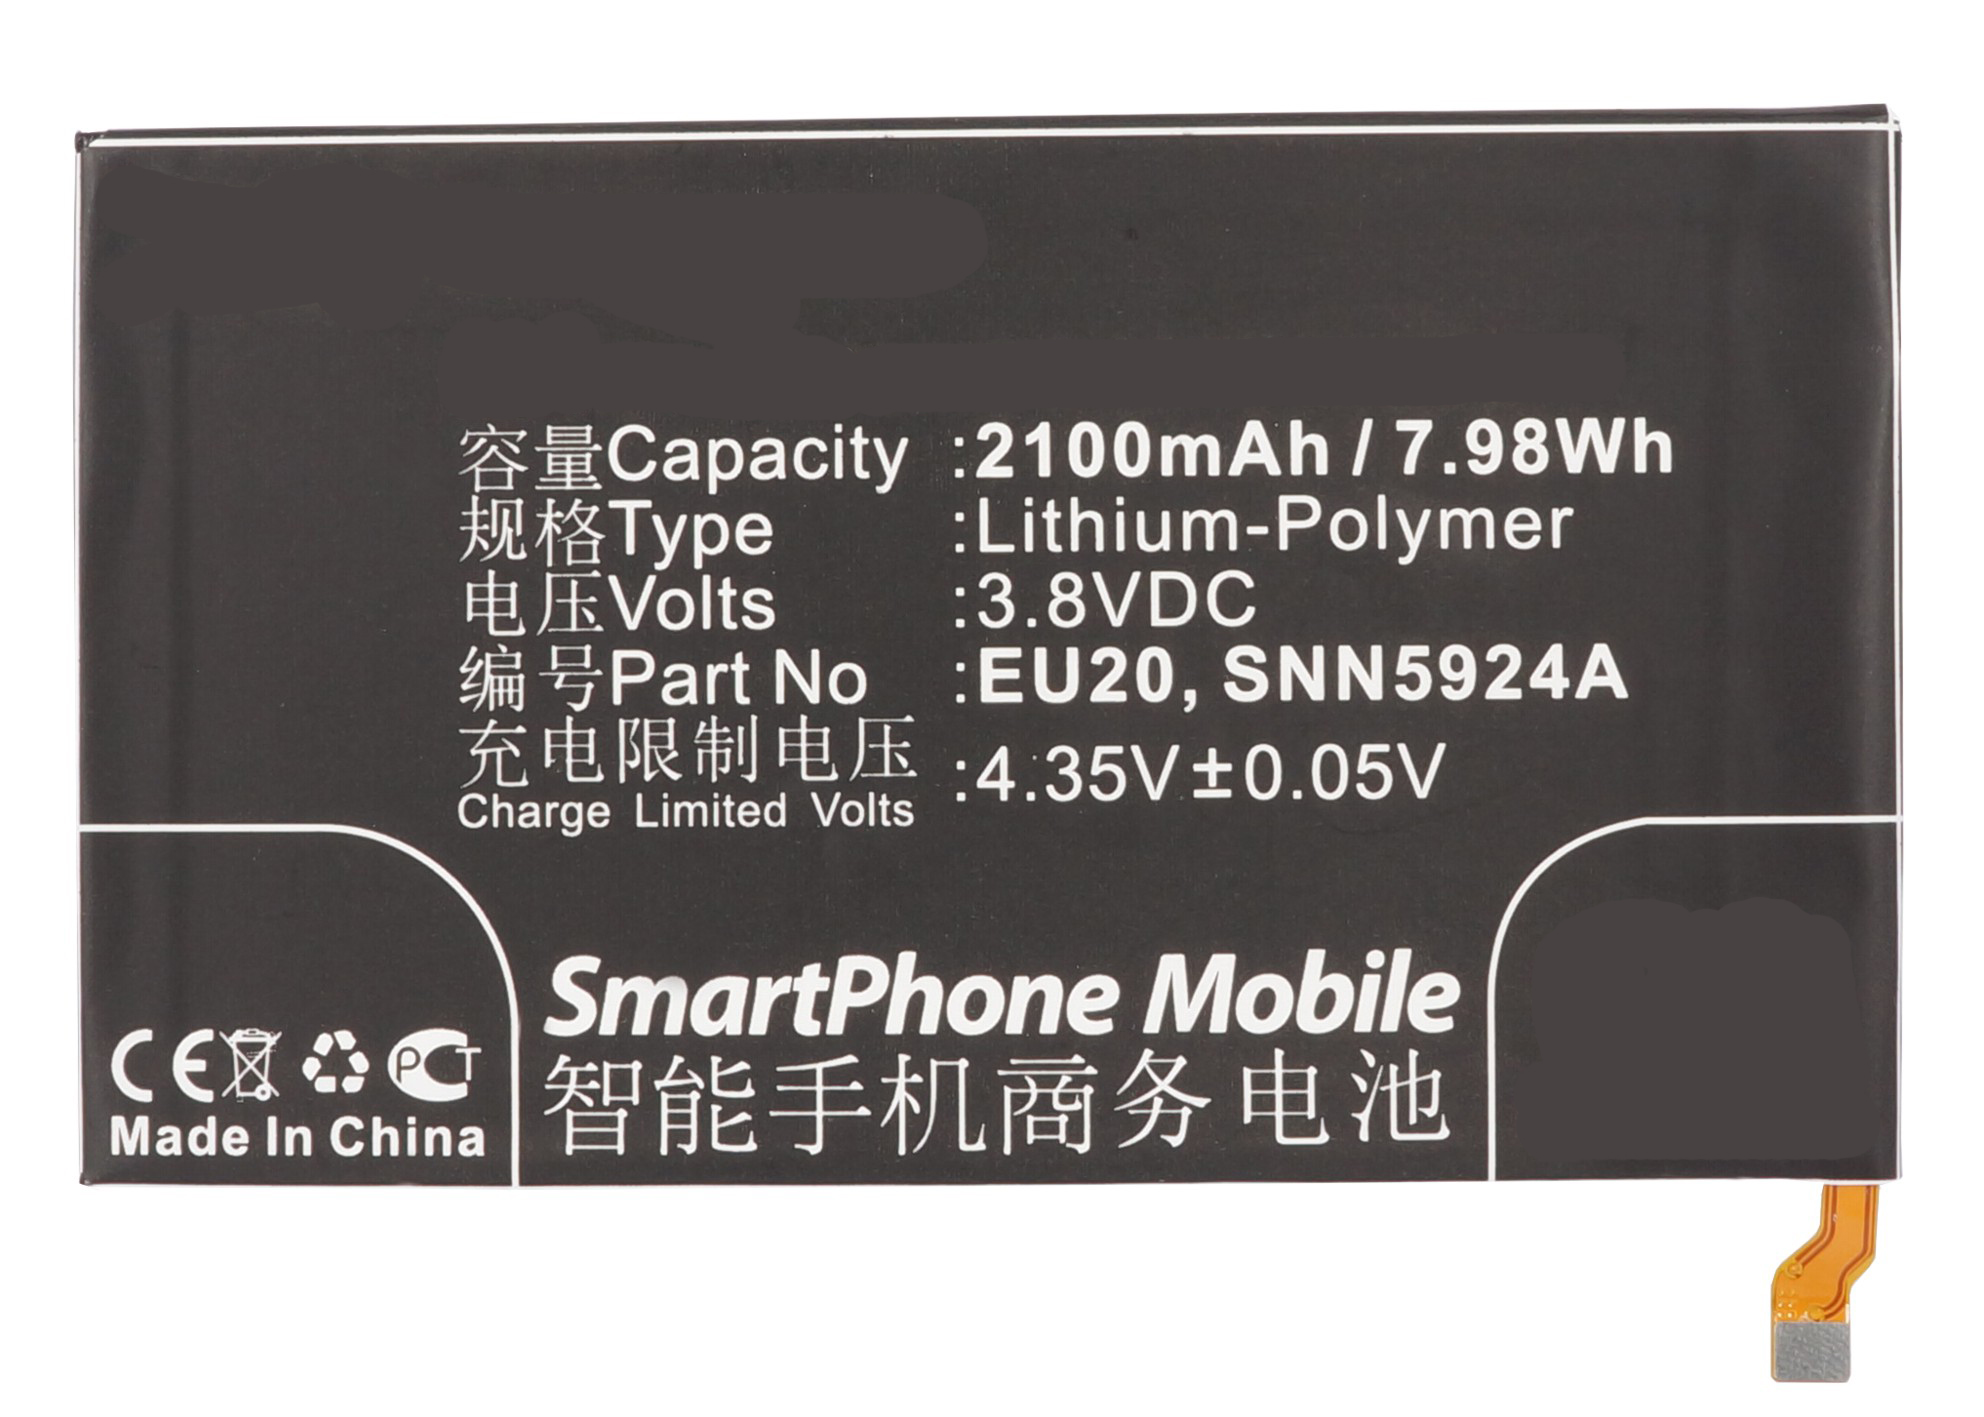 Synergy Digital Cell Phone Battery, Compatiable with Motorola EU20, SNN5924A Cell Phone Battery (3.8V, Li-Pol, 2100mAh)